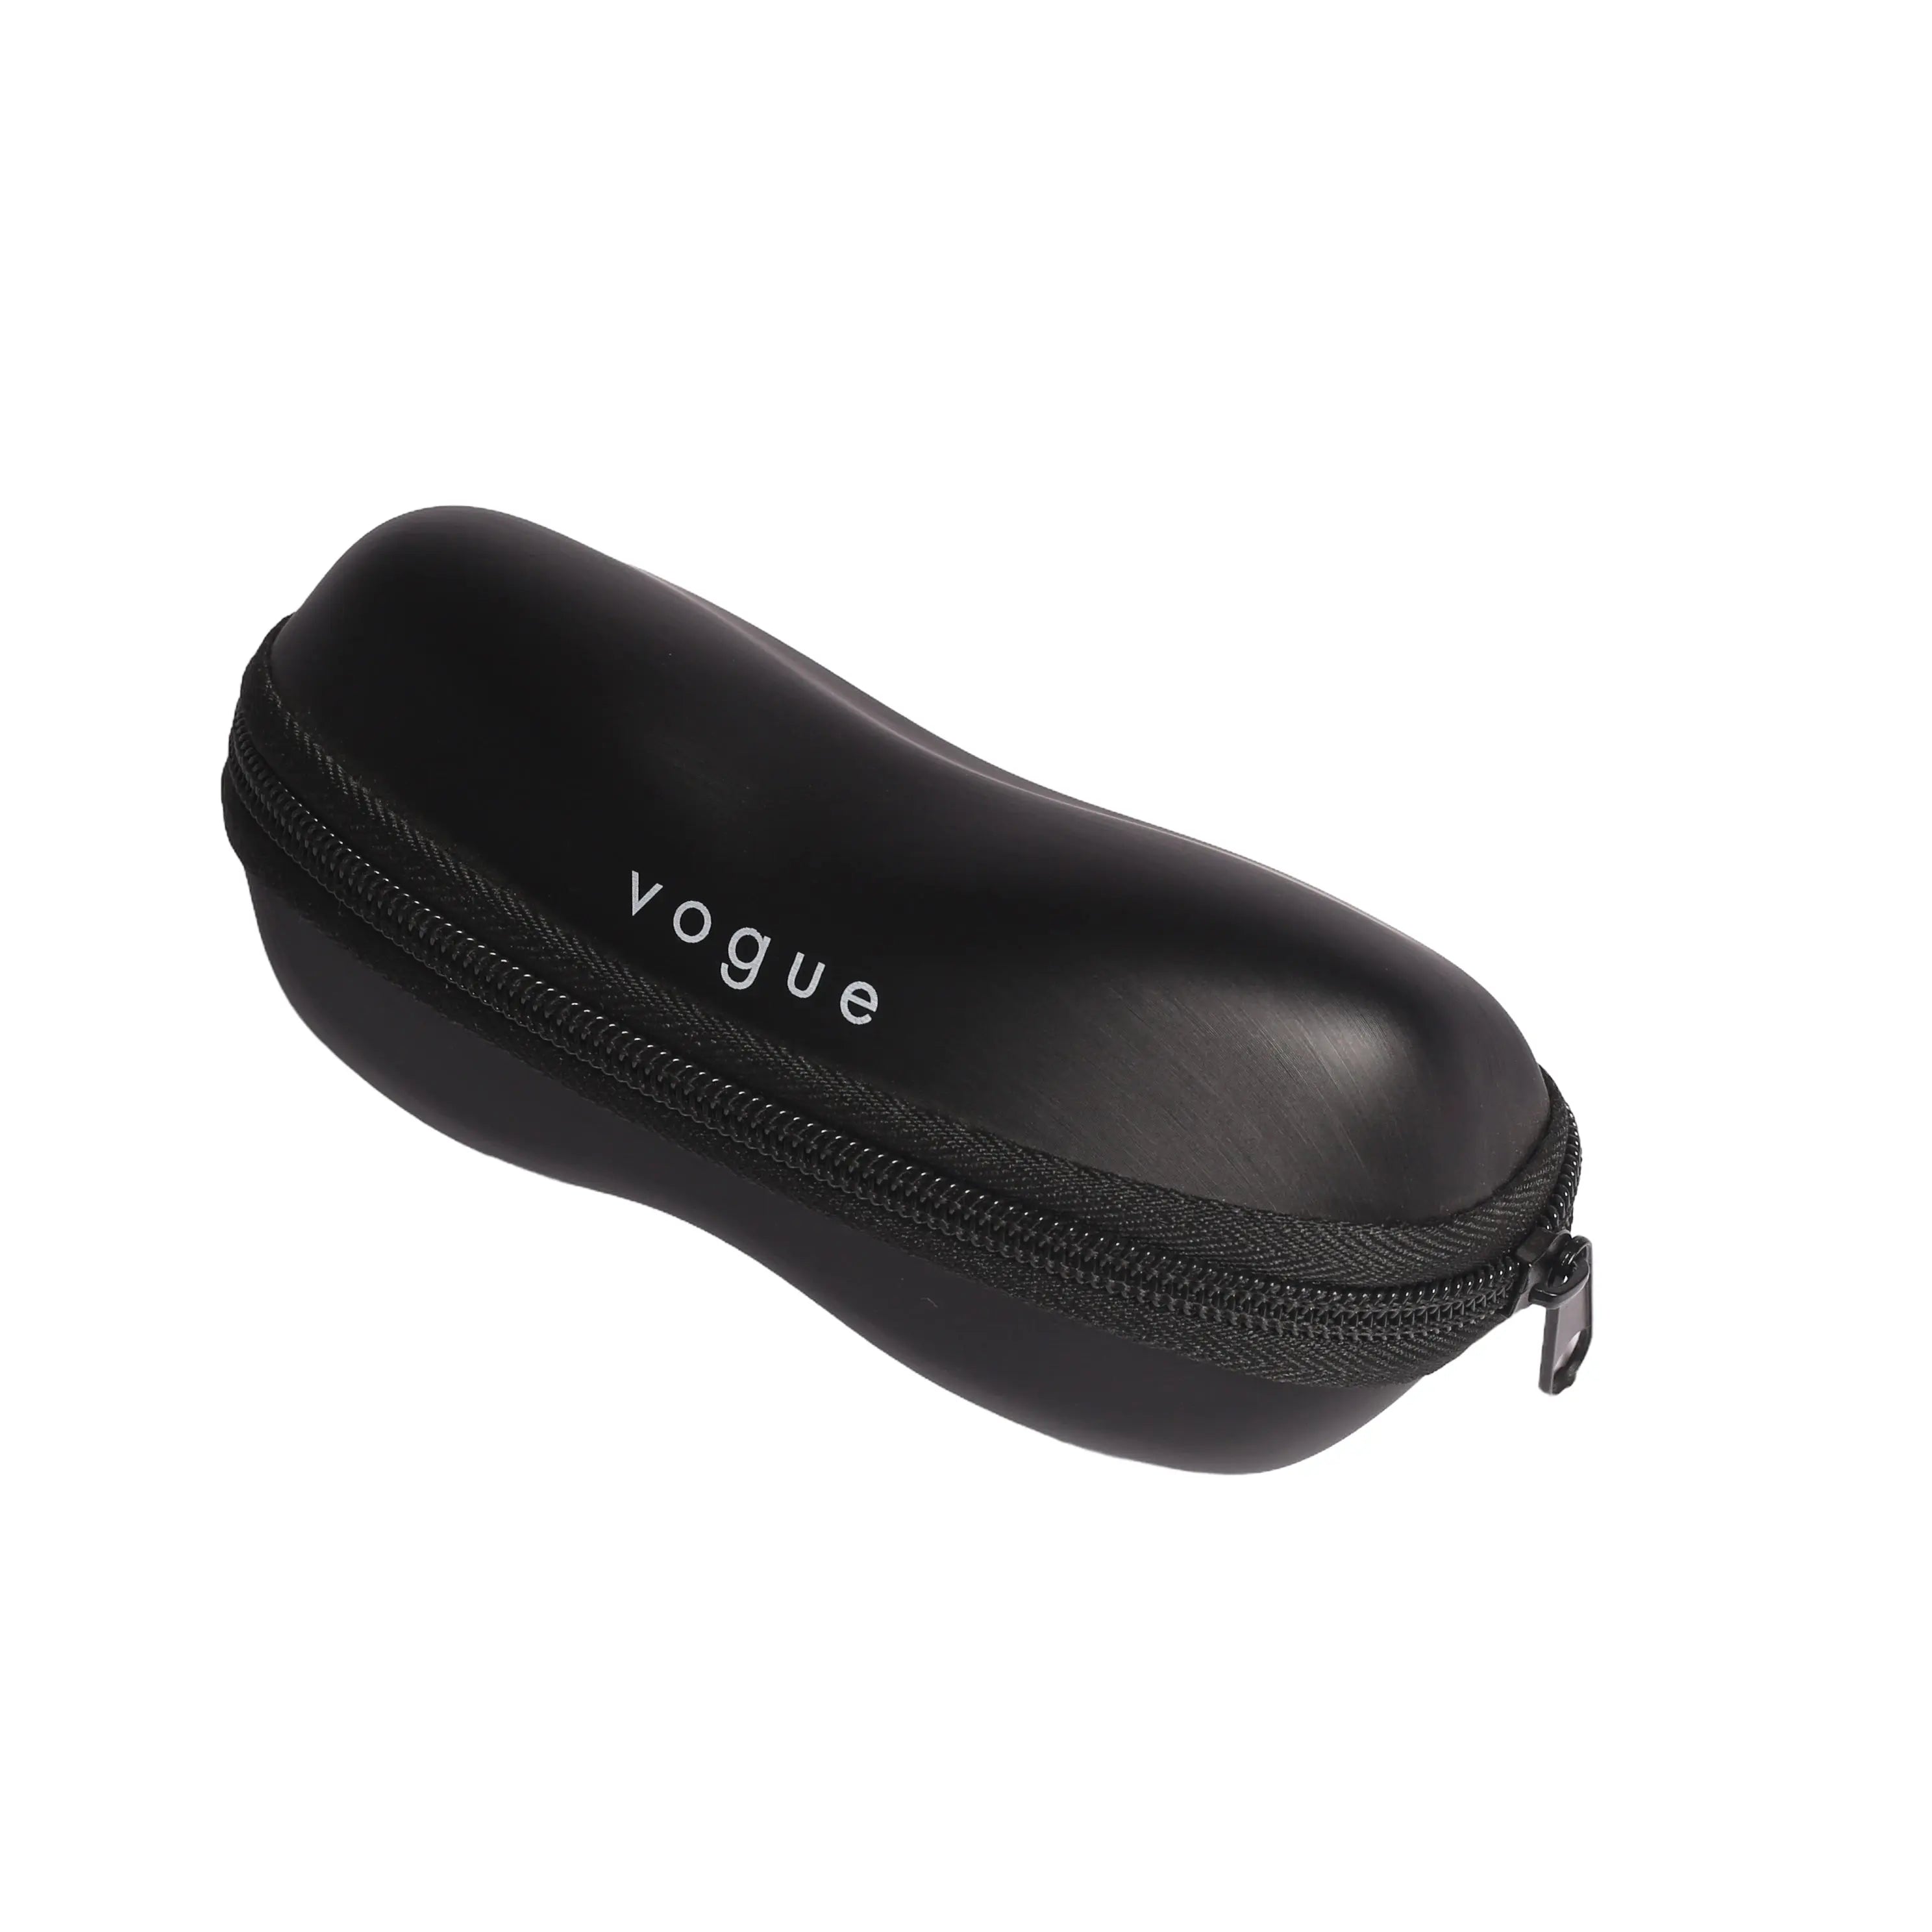 Vogue-VO5508-53-2386 Eyeglasses - Premium Eyeglasses from Vogue - Just Rs. 2990! Shop now at Laxmi Opticians